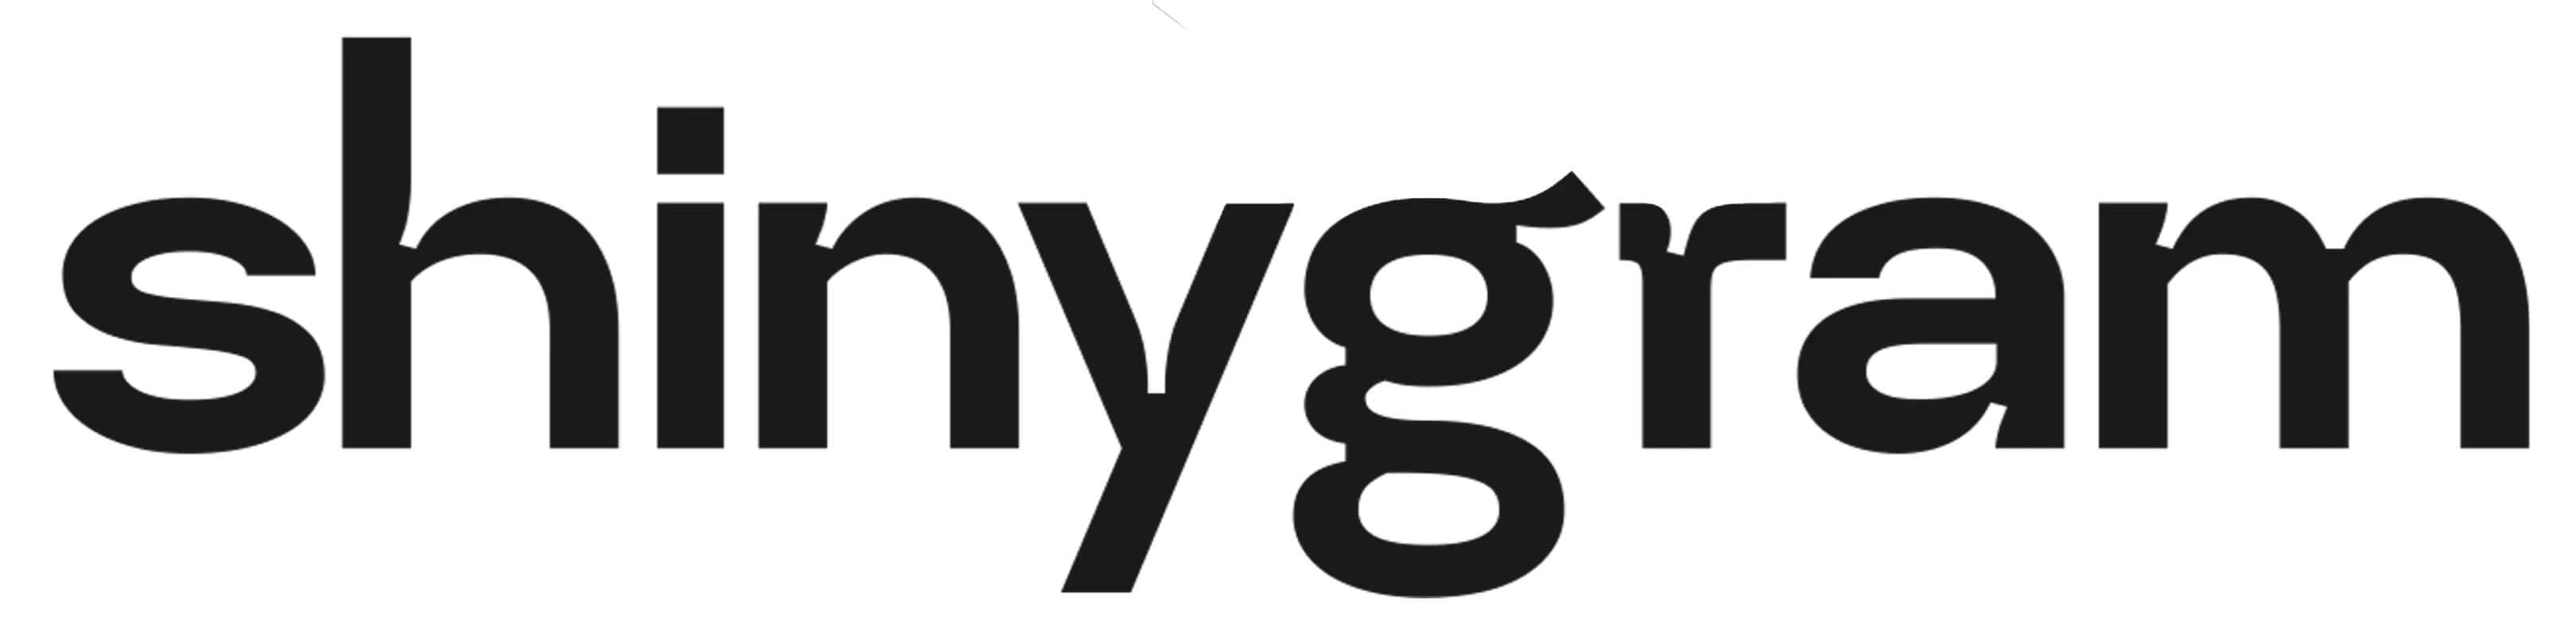 Shinygram-logo